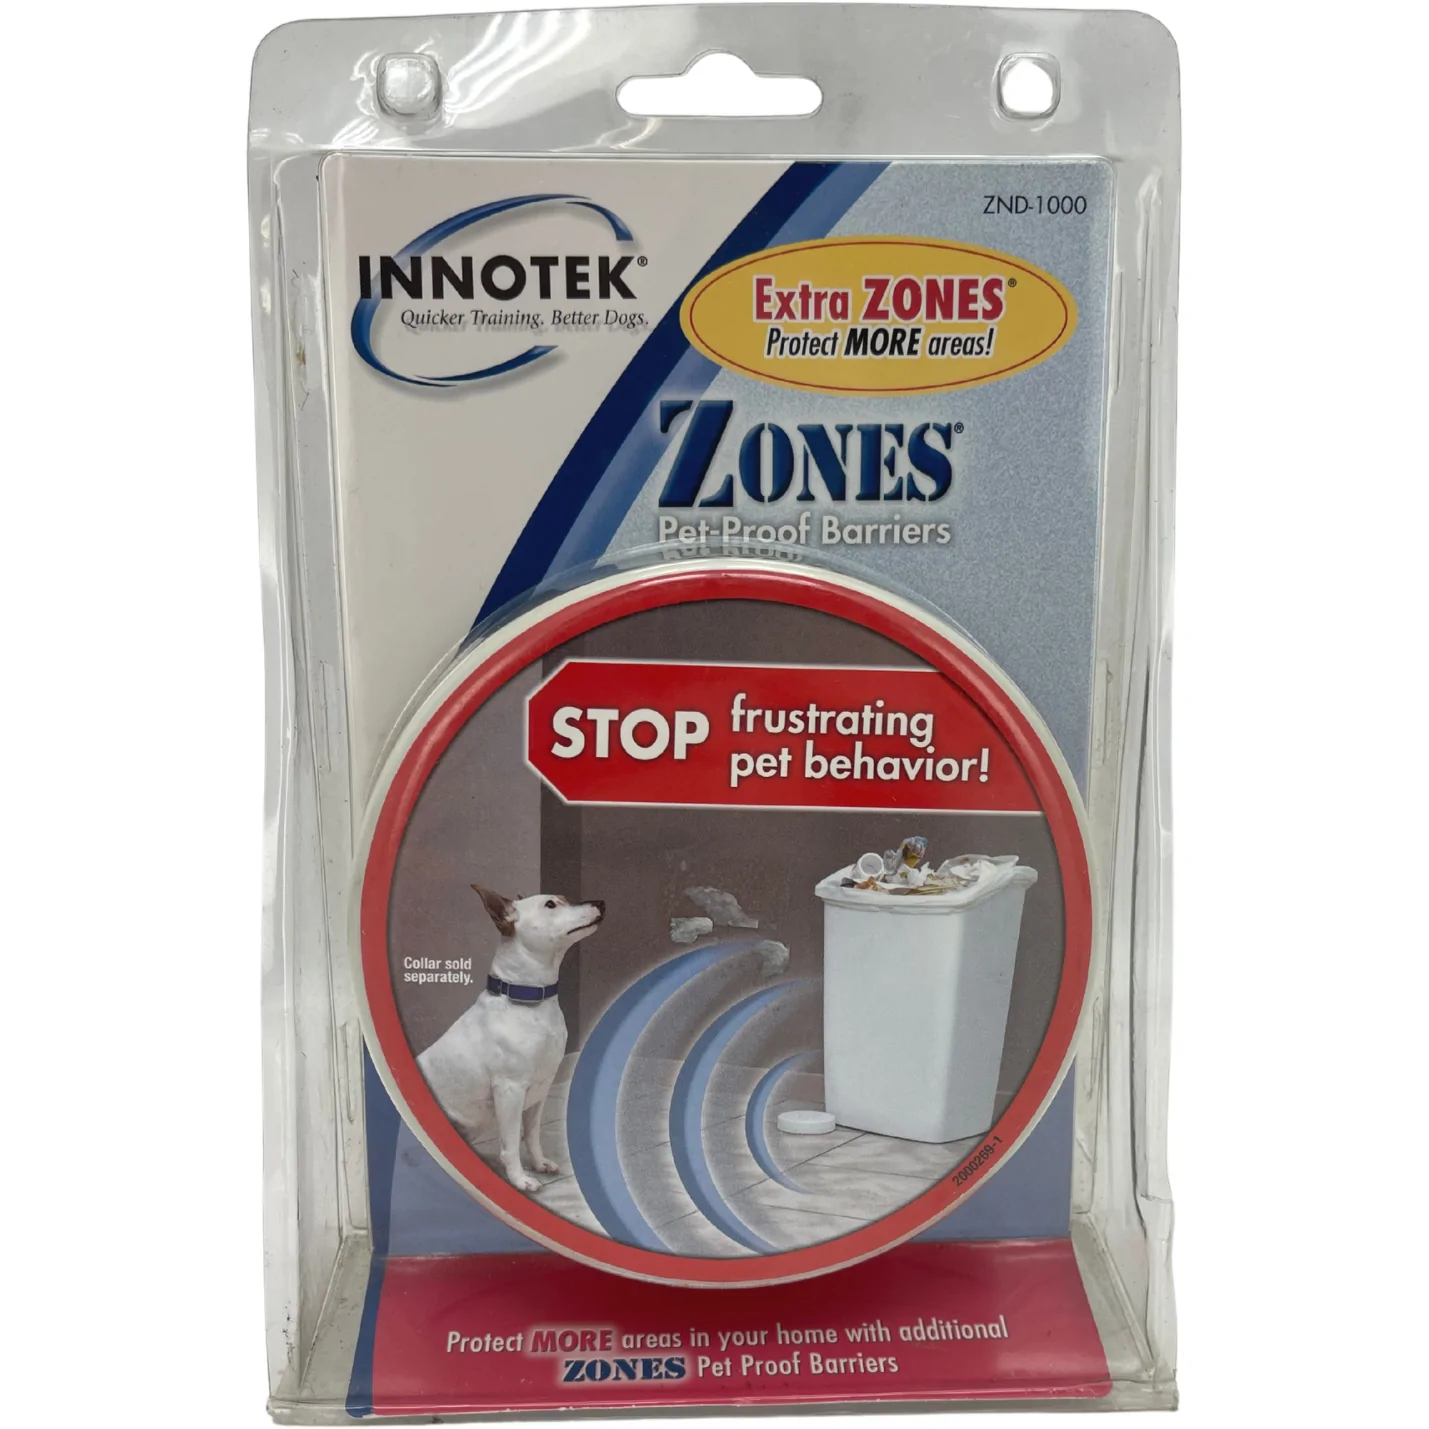 Innotek Zones Pet-Proof Barrier / Dog Training Tool / ZND-1000